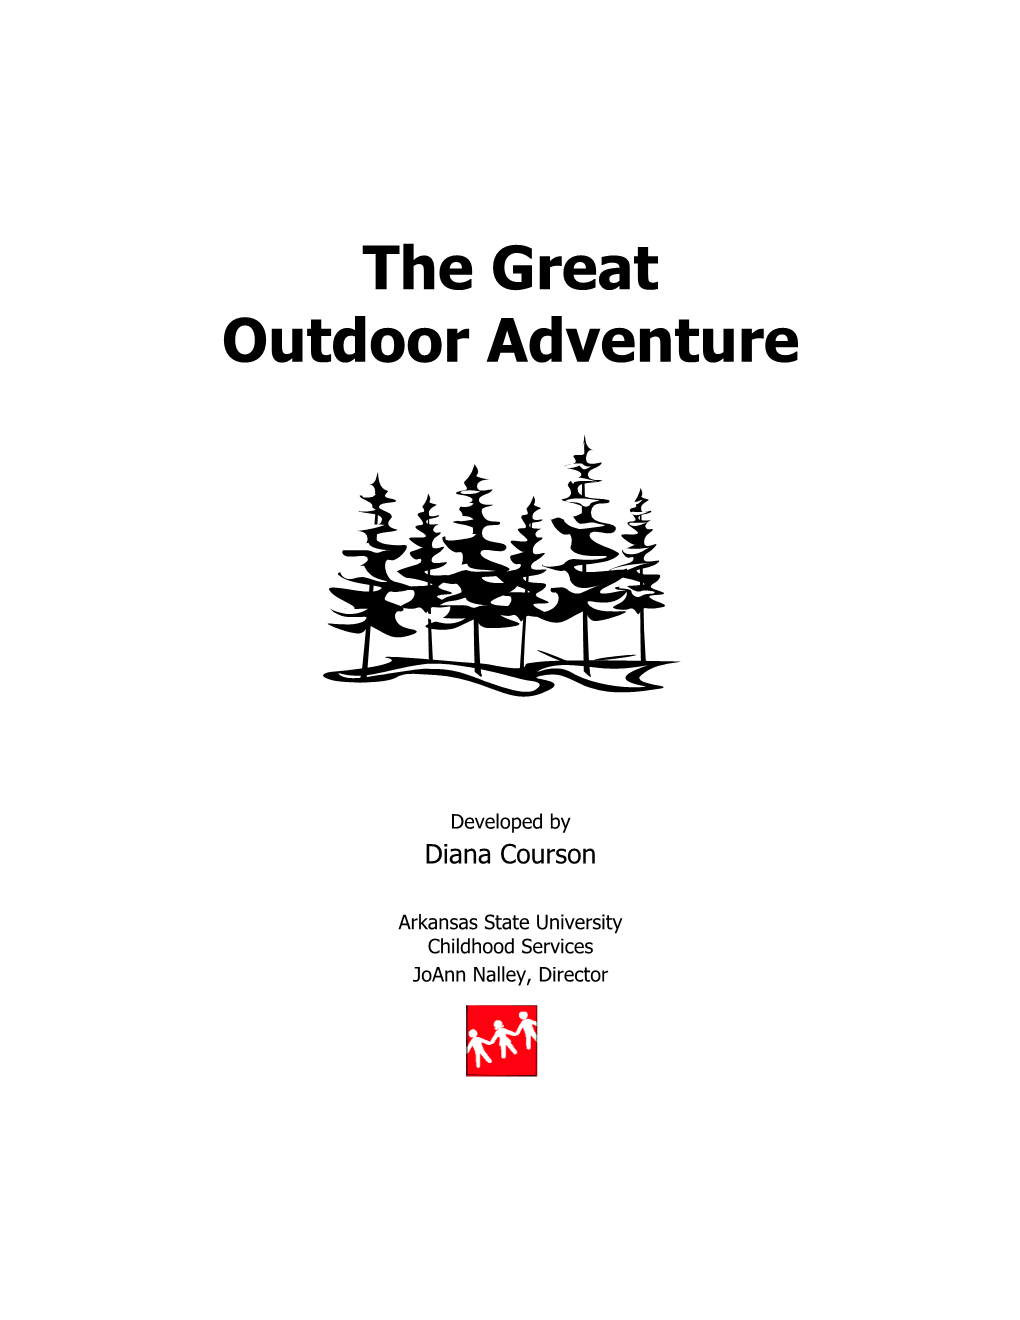 The Great Outdoor Adventure